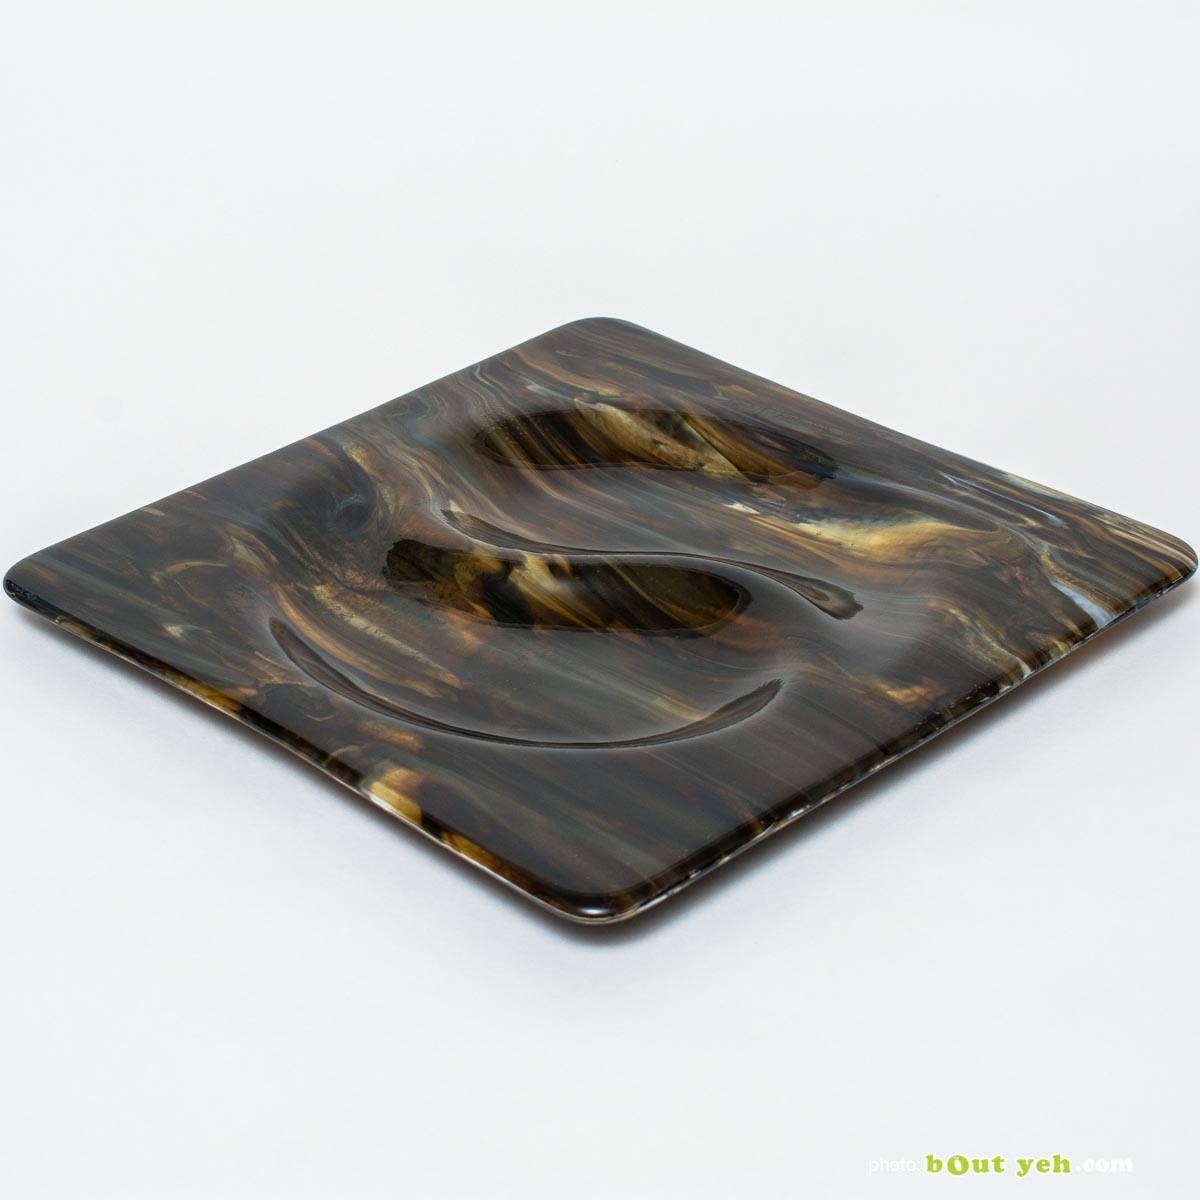 Ying yang square bullseye glass plate with copper patternation by Chris Sheppard Irish glassware - photo 1591